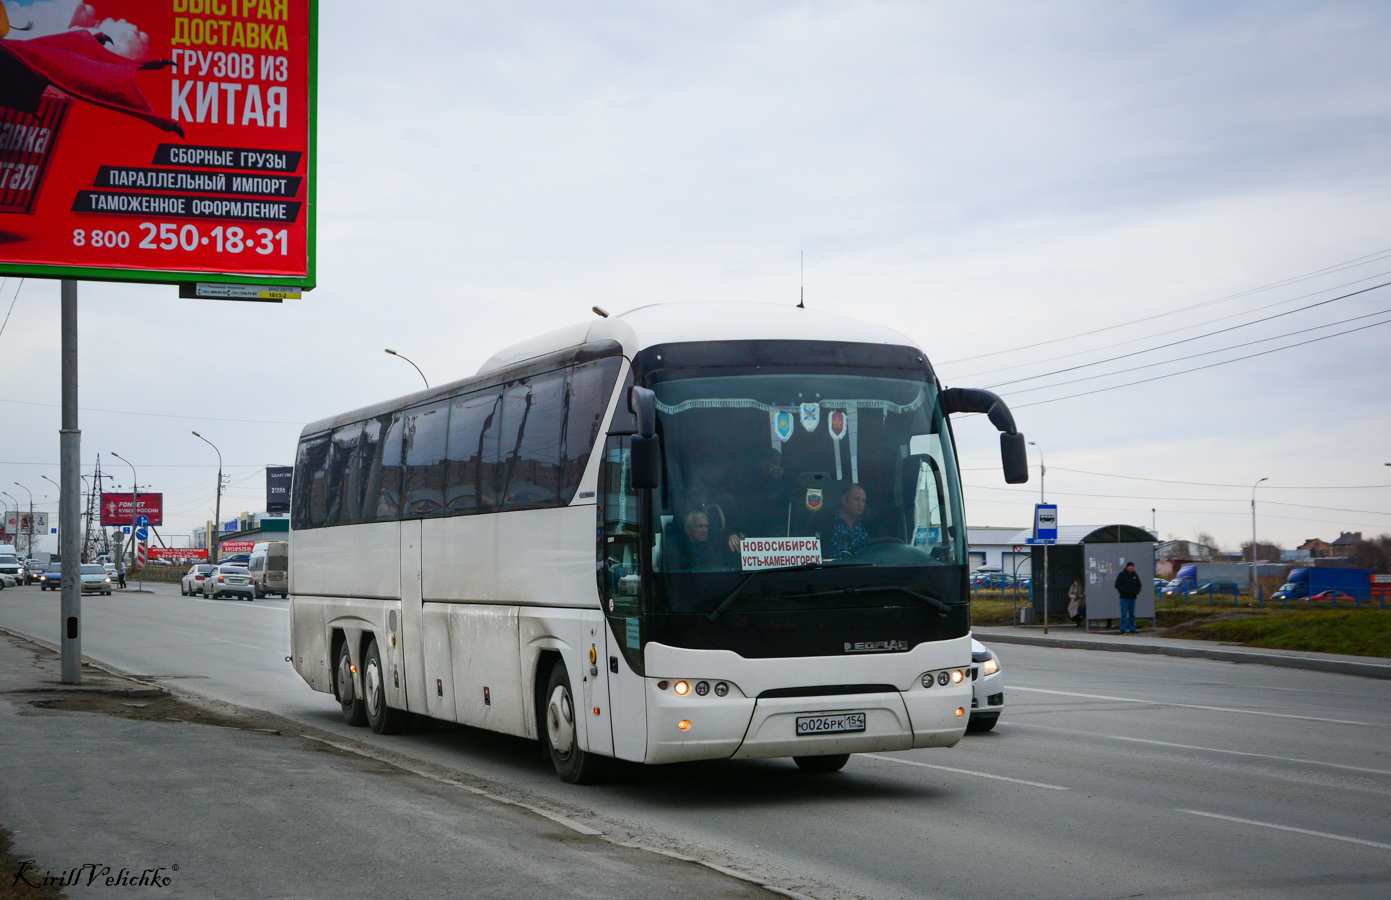 Novoszibirszki terület, Neoplan P22 N2216/3SHDL Tourliner SHDL sz.: О 026 РК 154